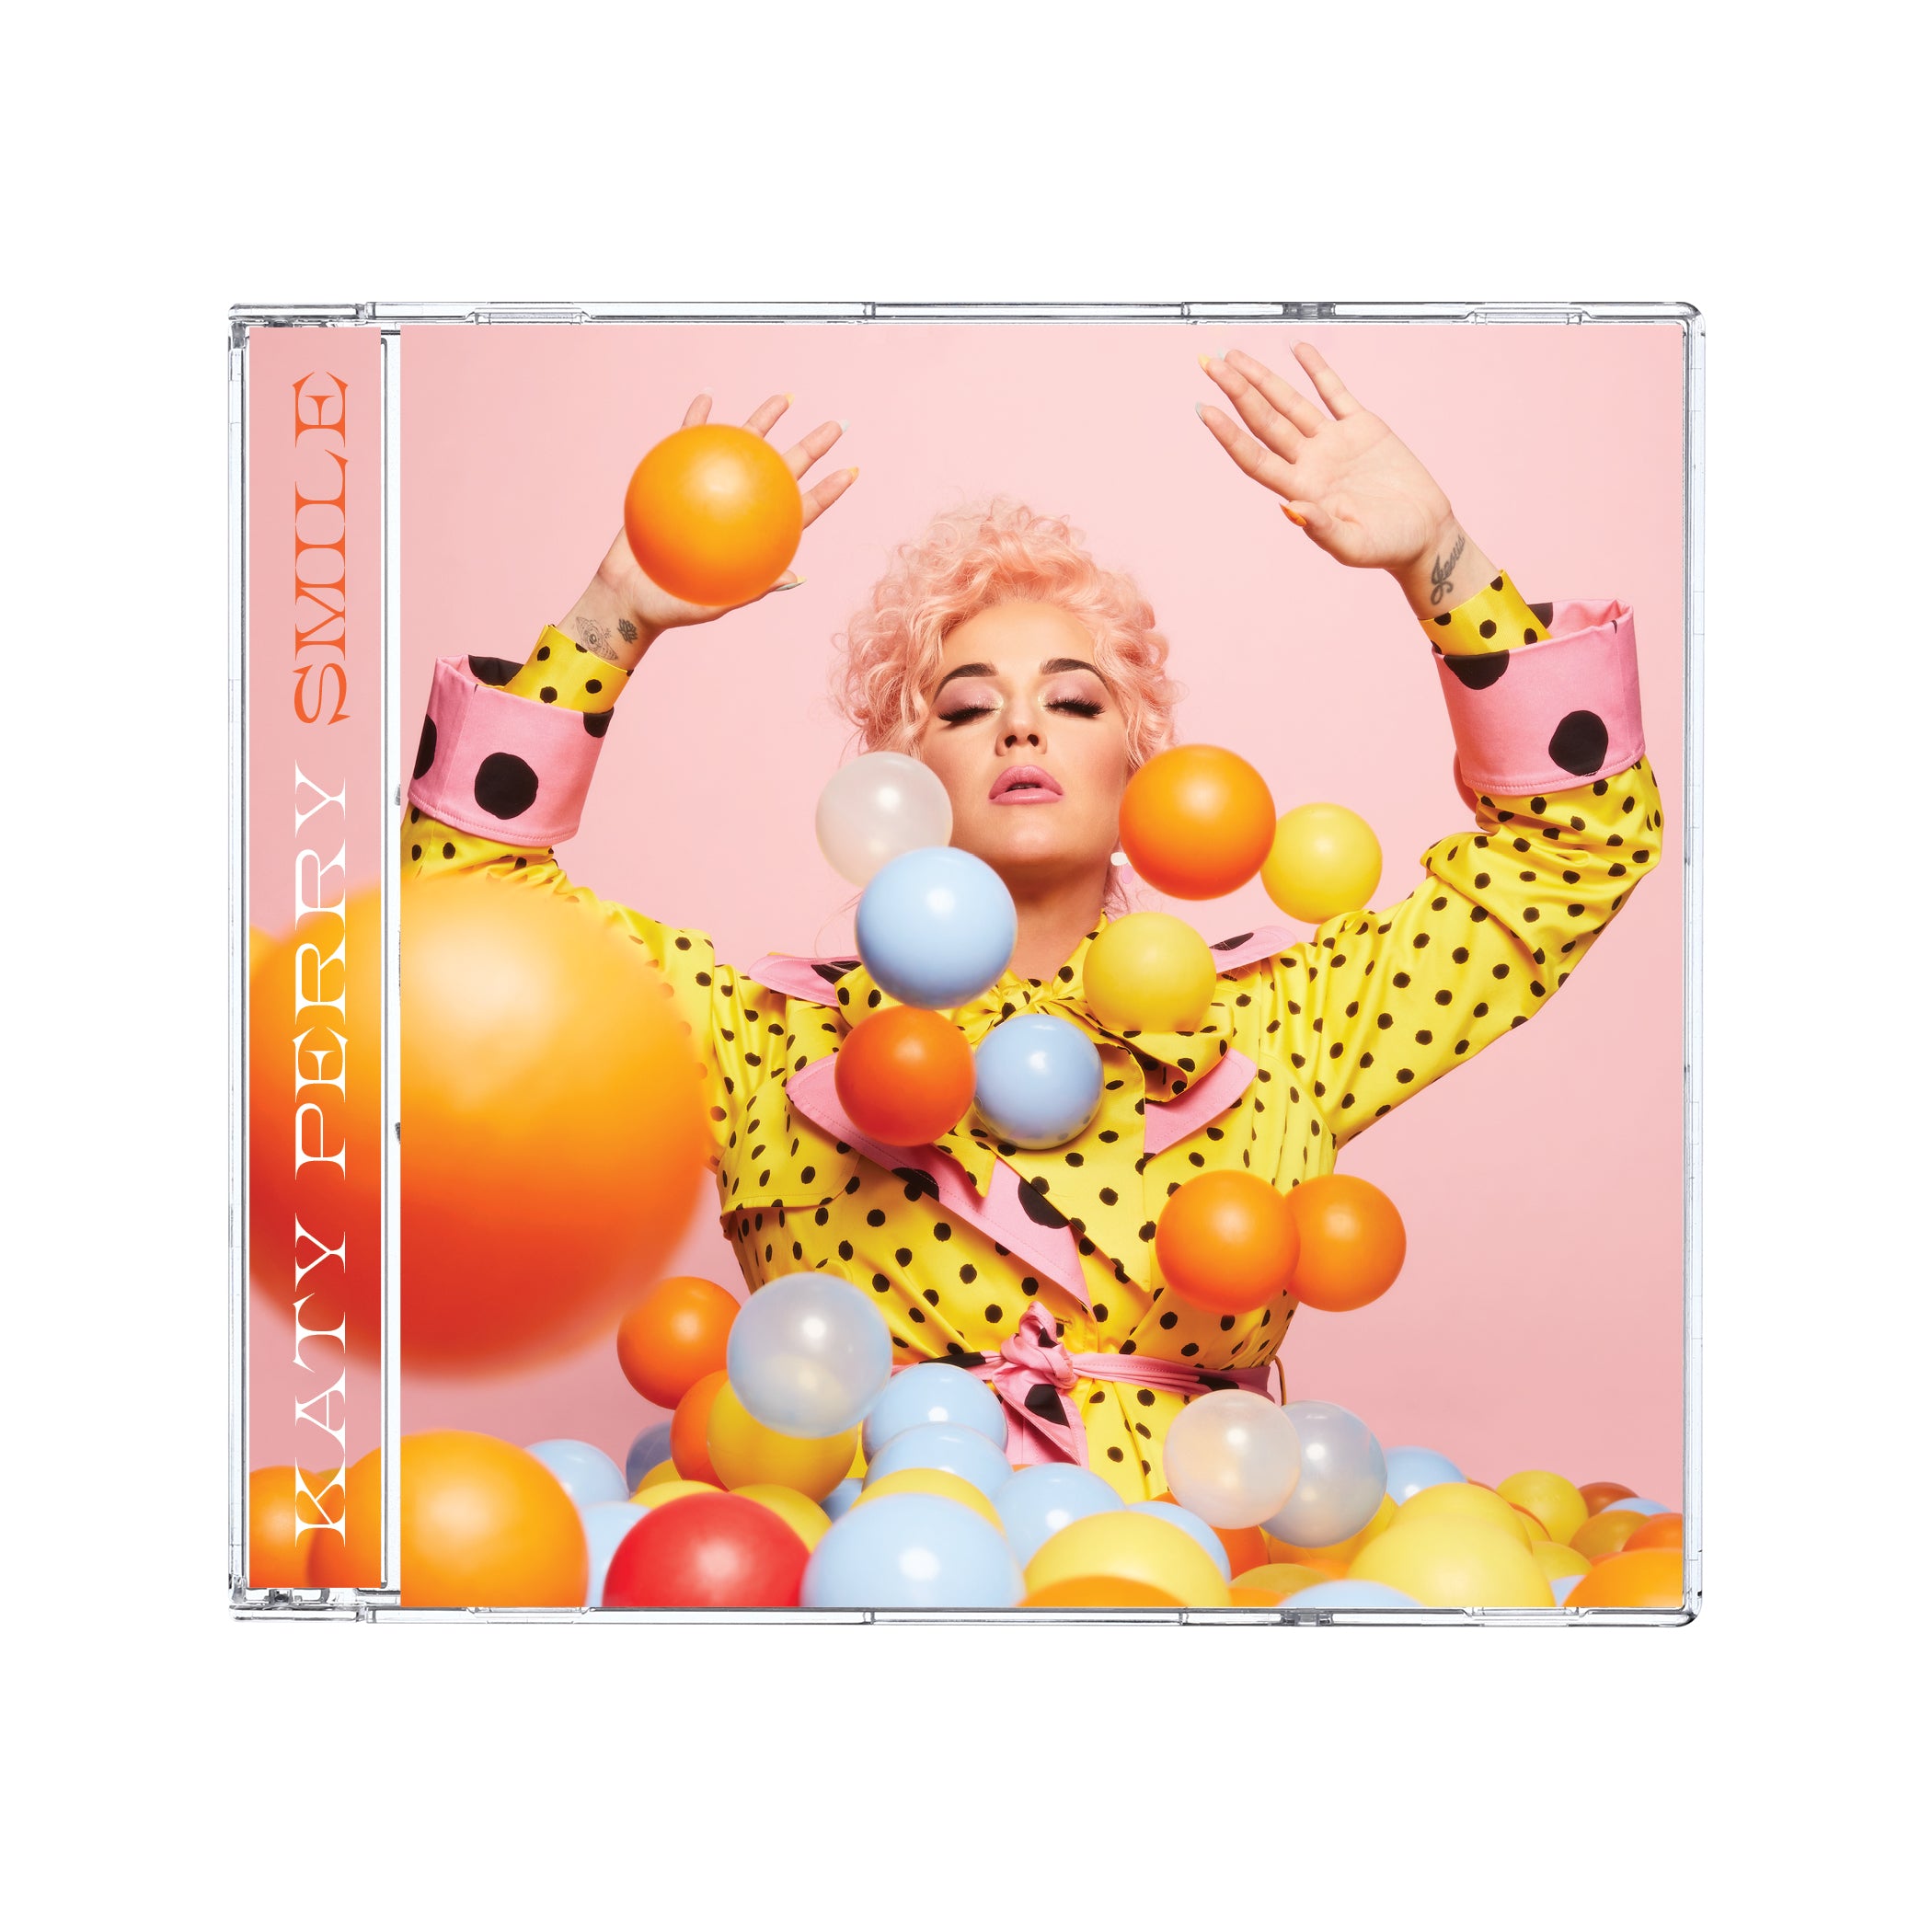 Katy Perry - Smile CD (Alternate Cover #5). 